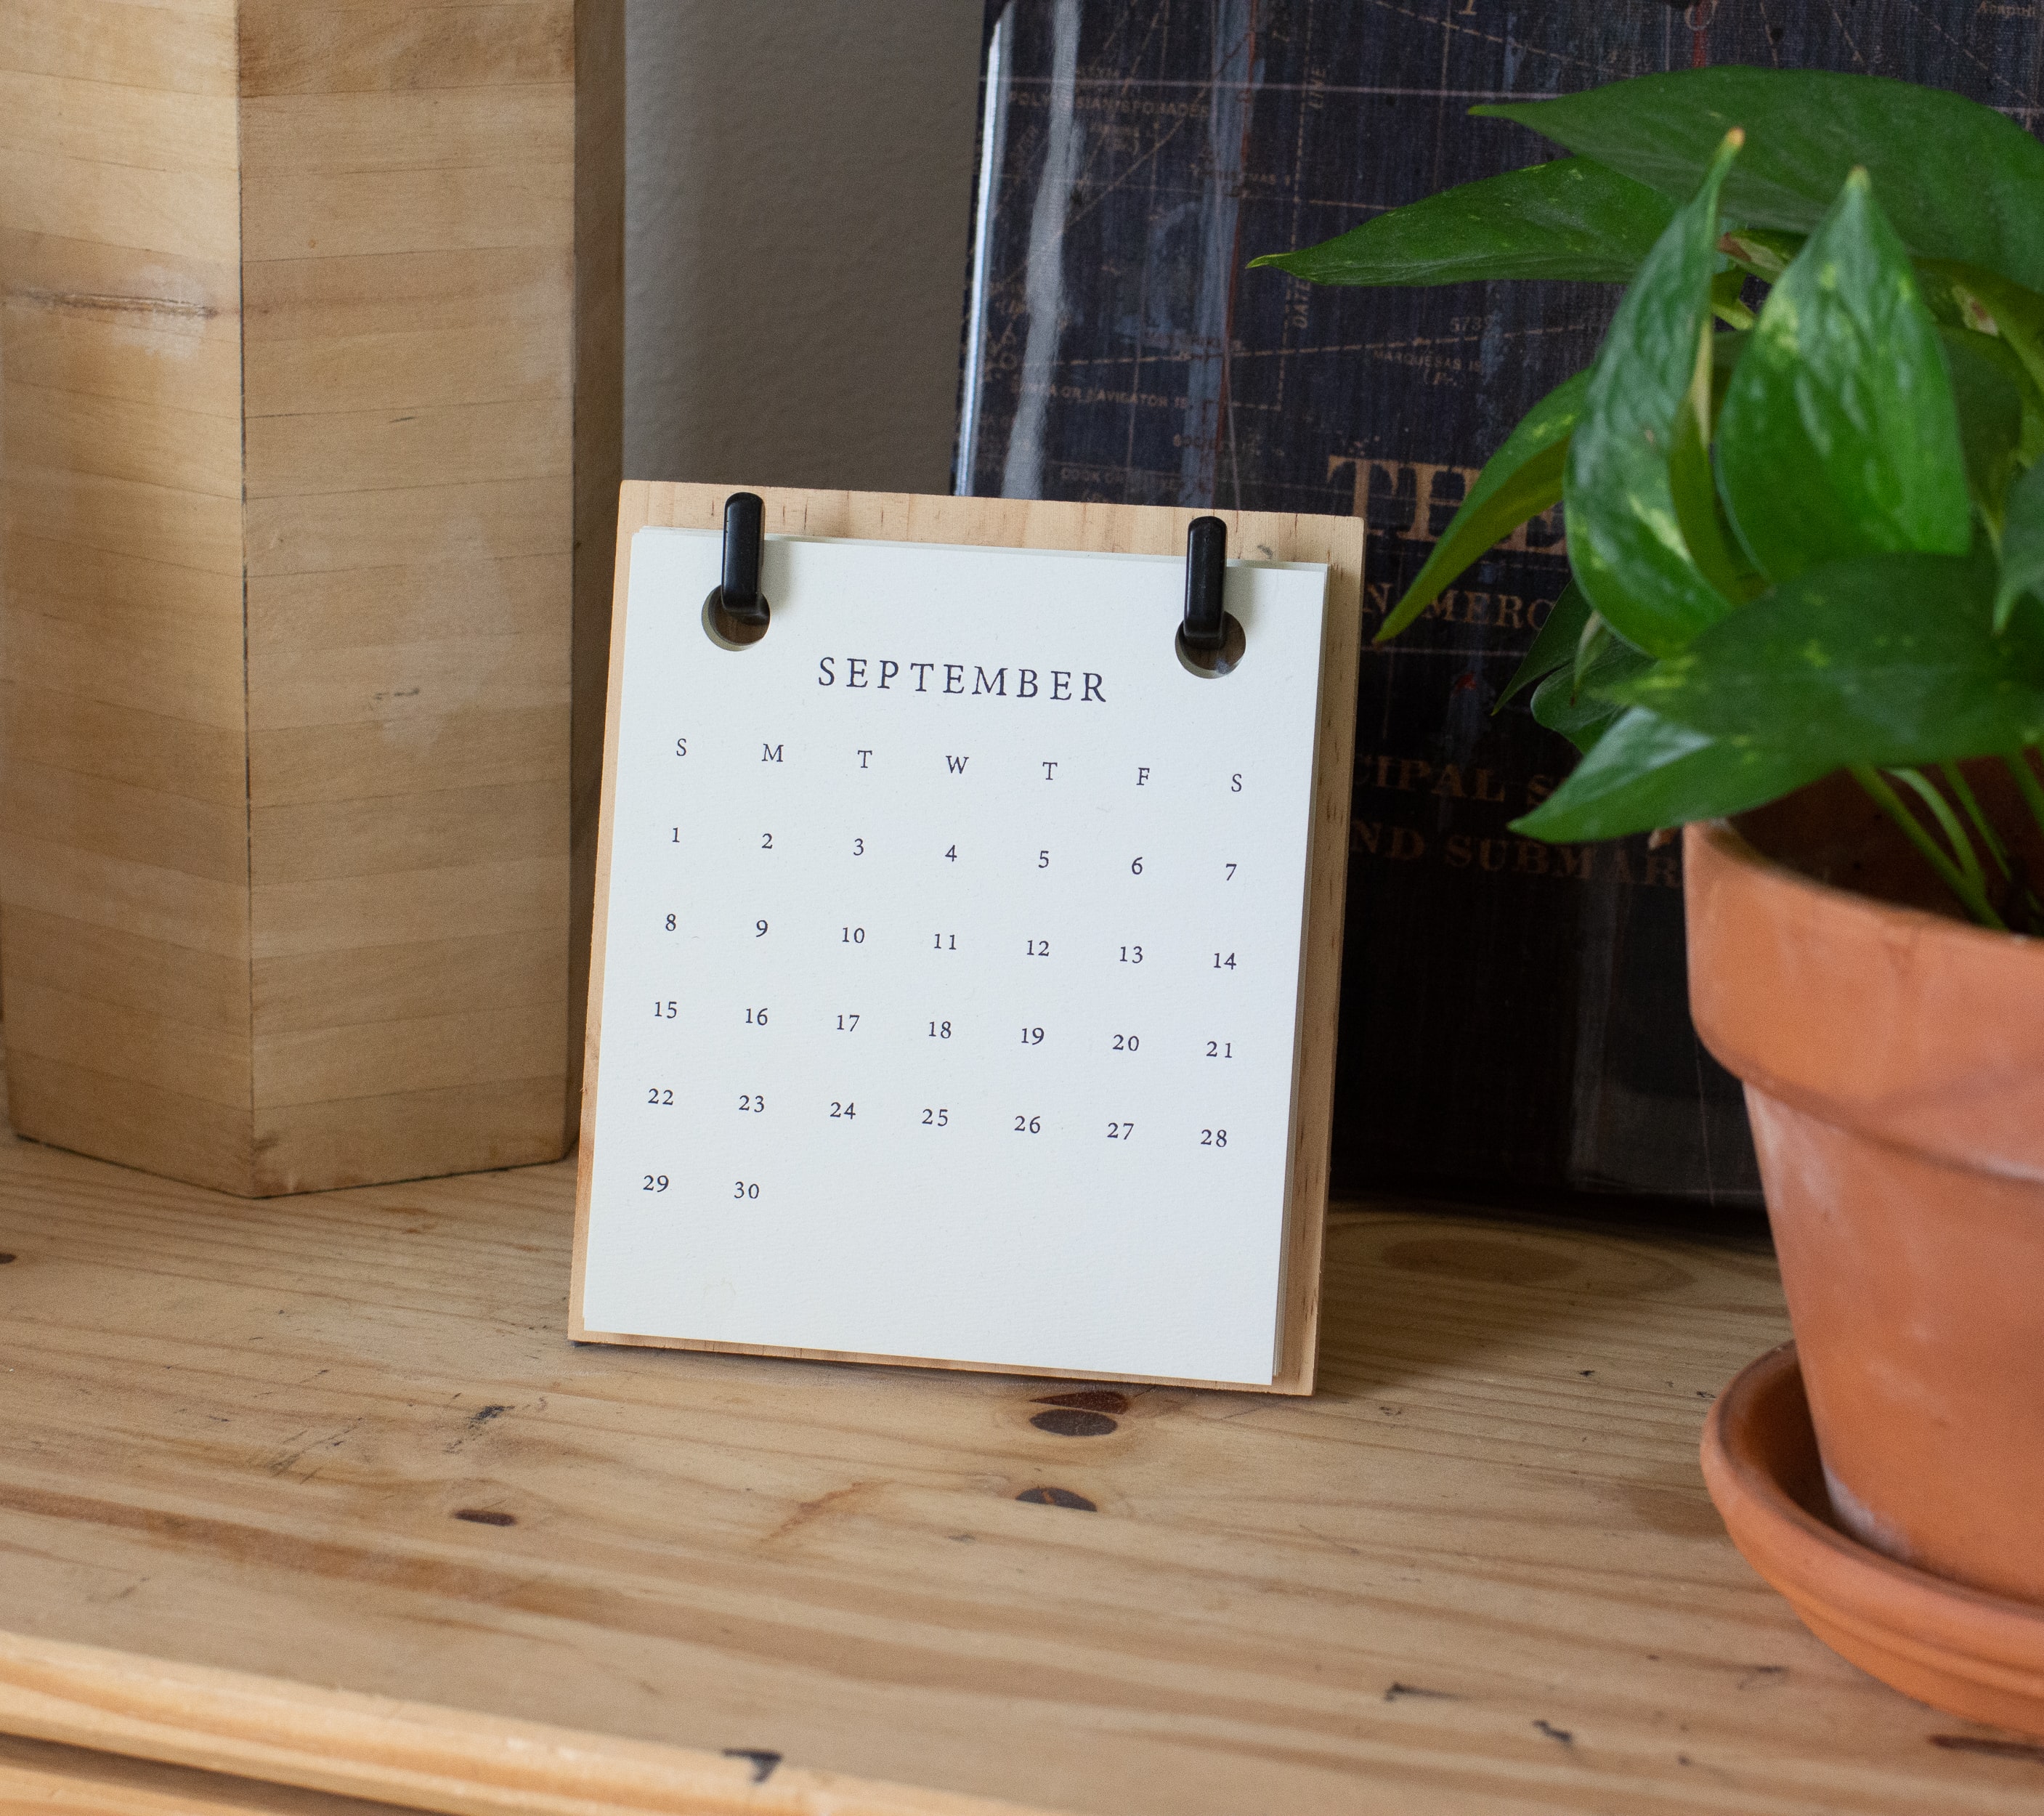 Calendar of September, plant in a planter, both on a wooden desk or shelf.